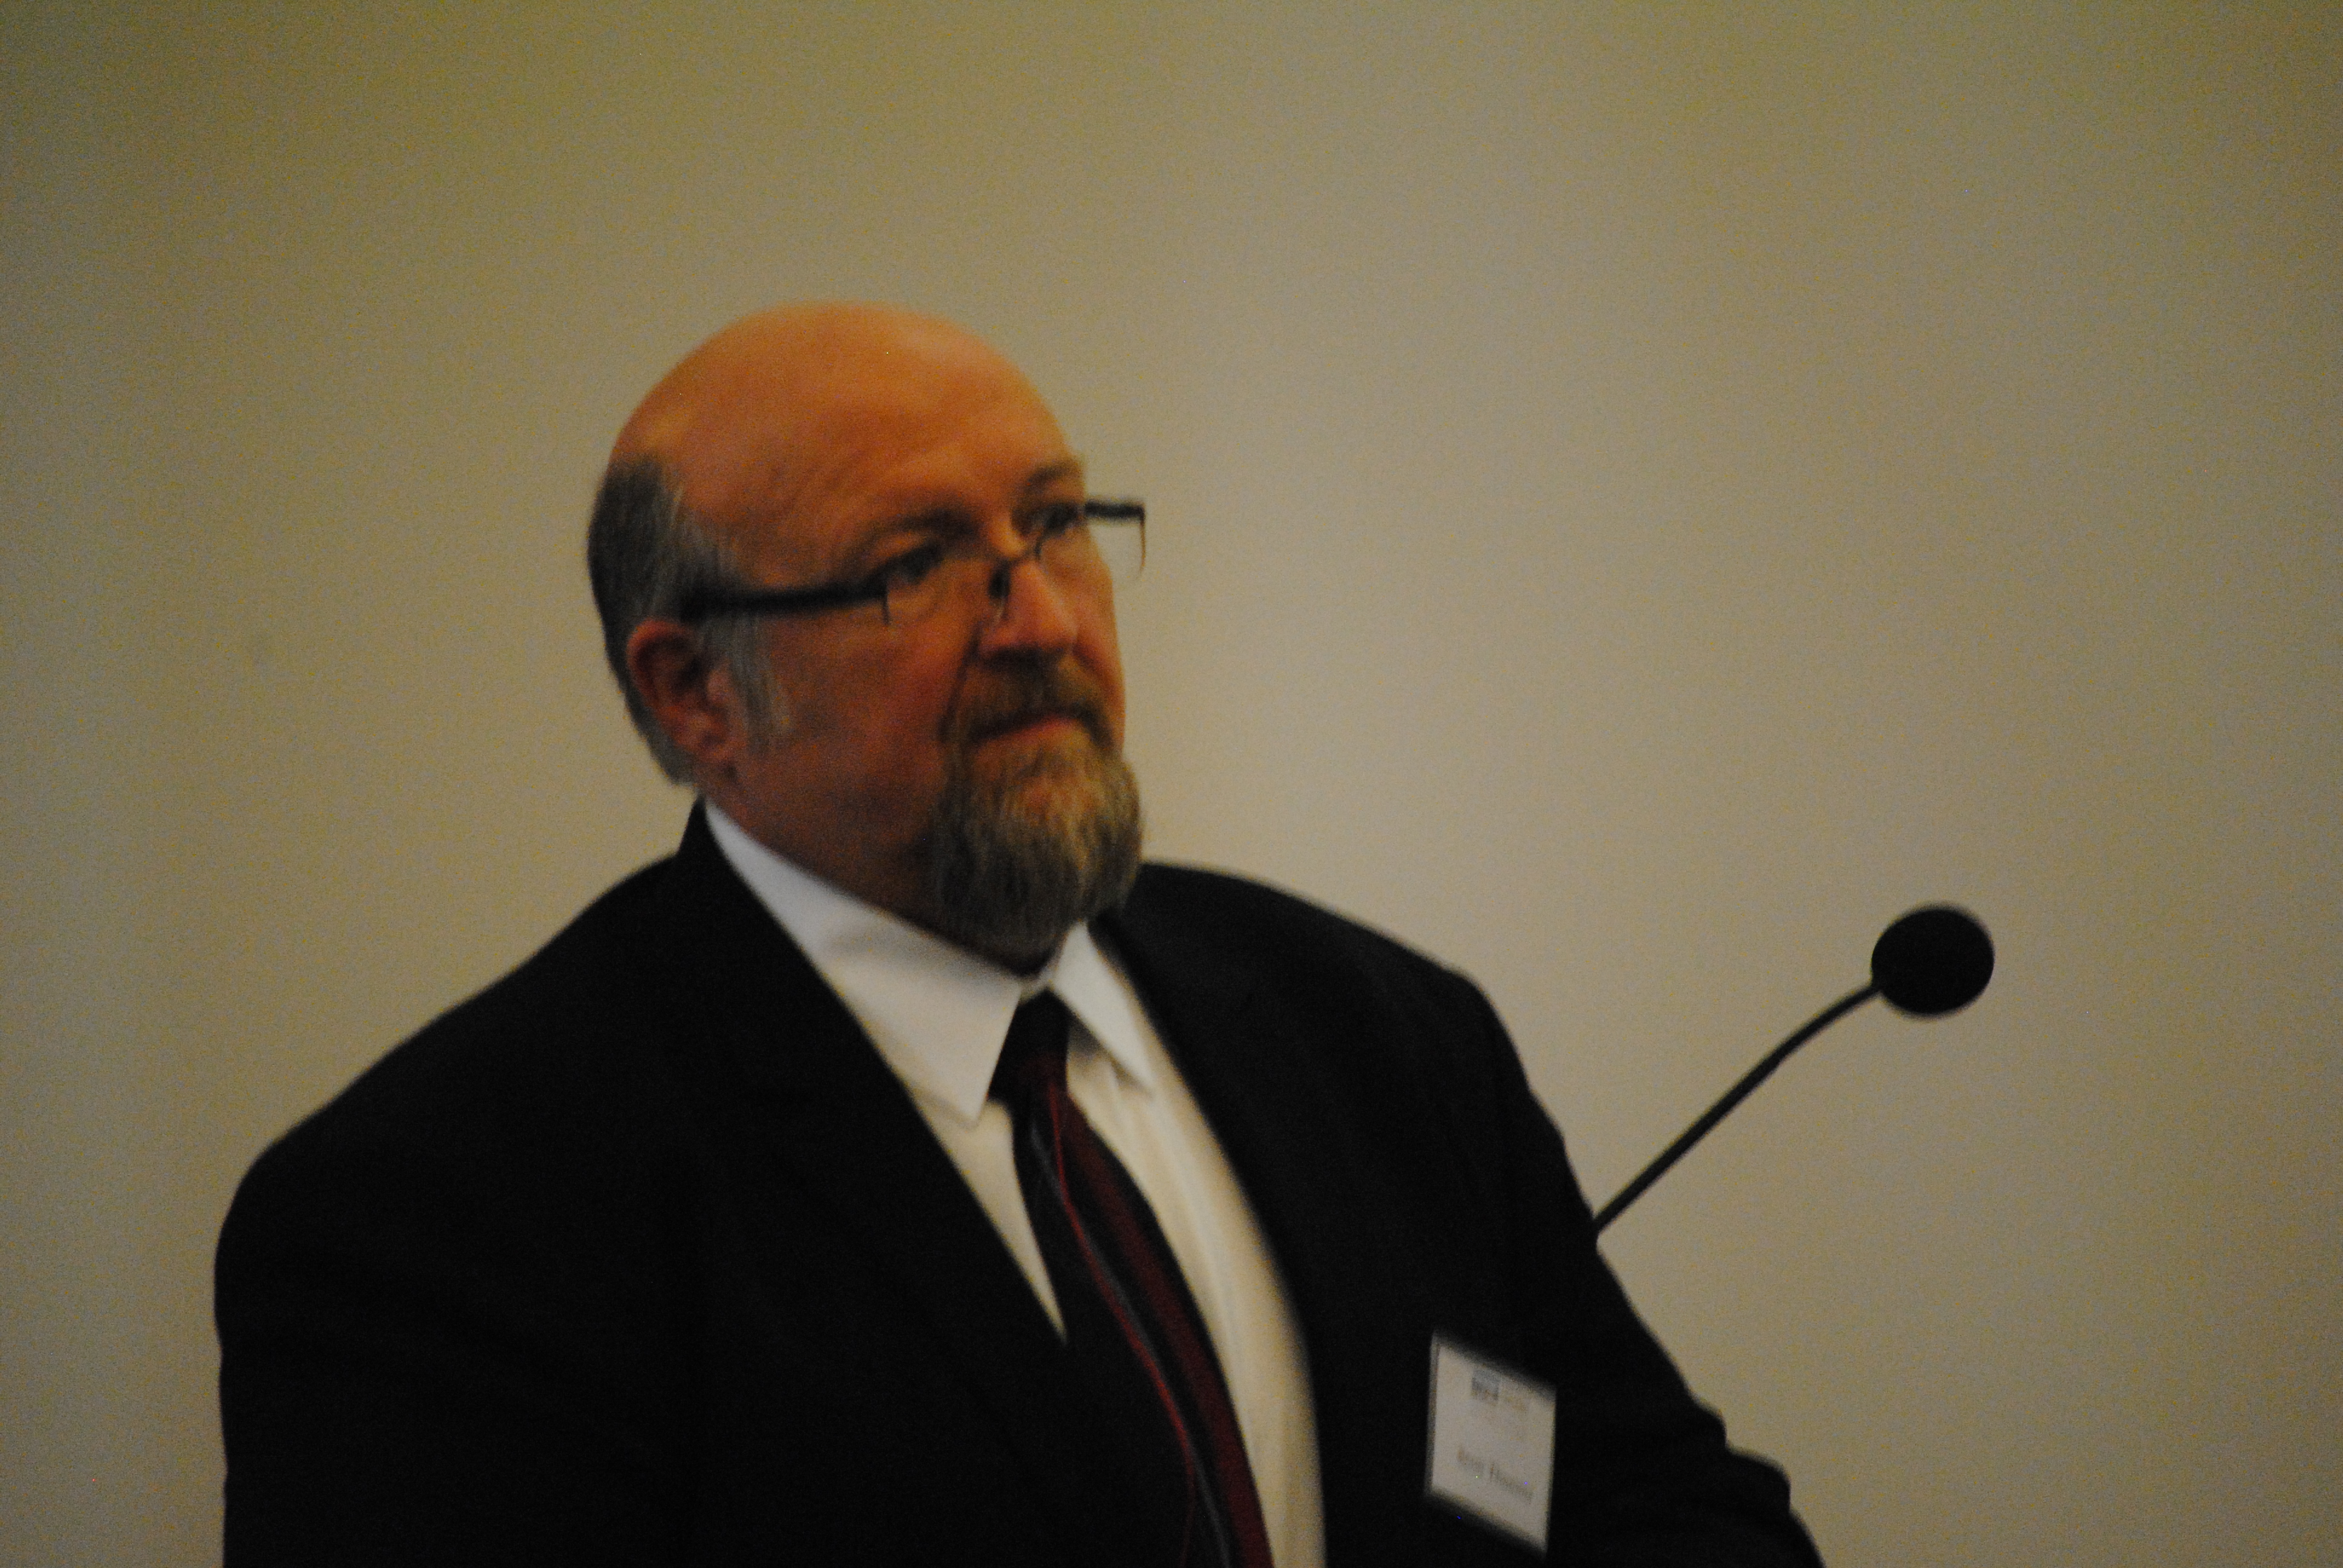 Prof. Scott Thumma, Director of the Hartford Institute for Religion Research